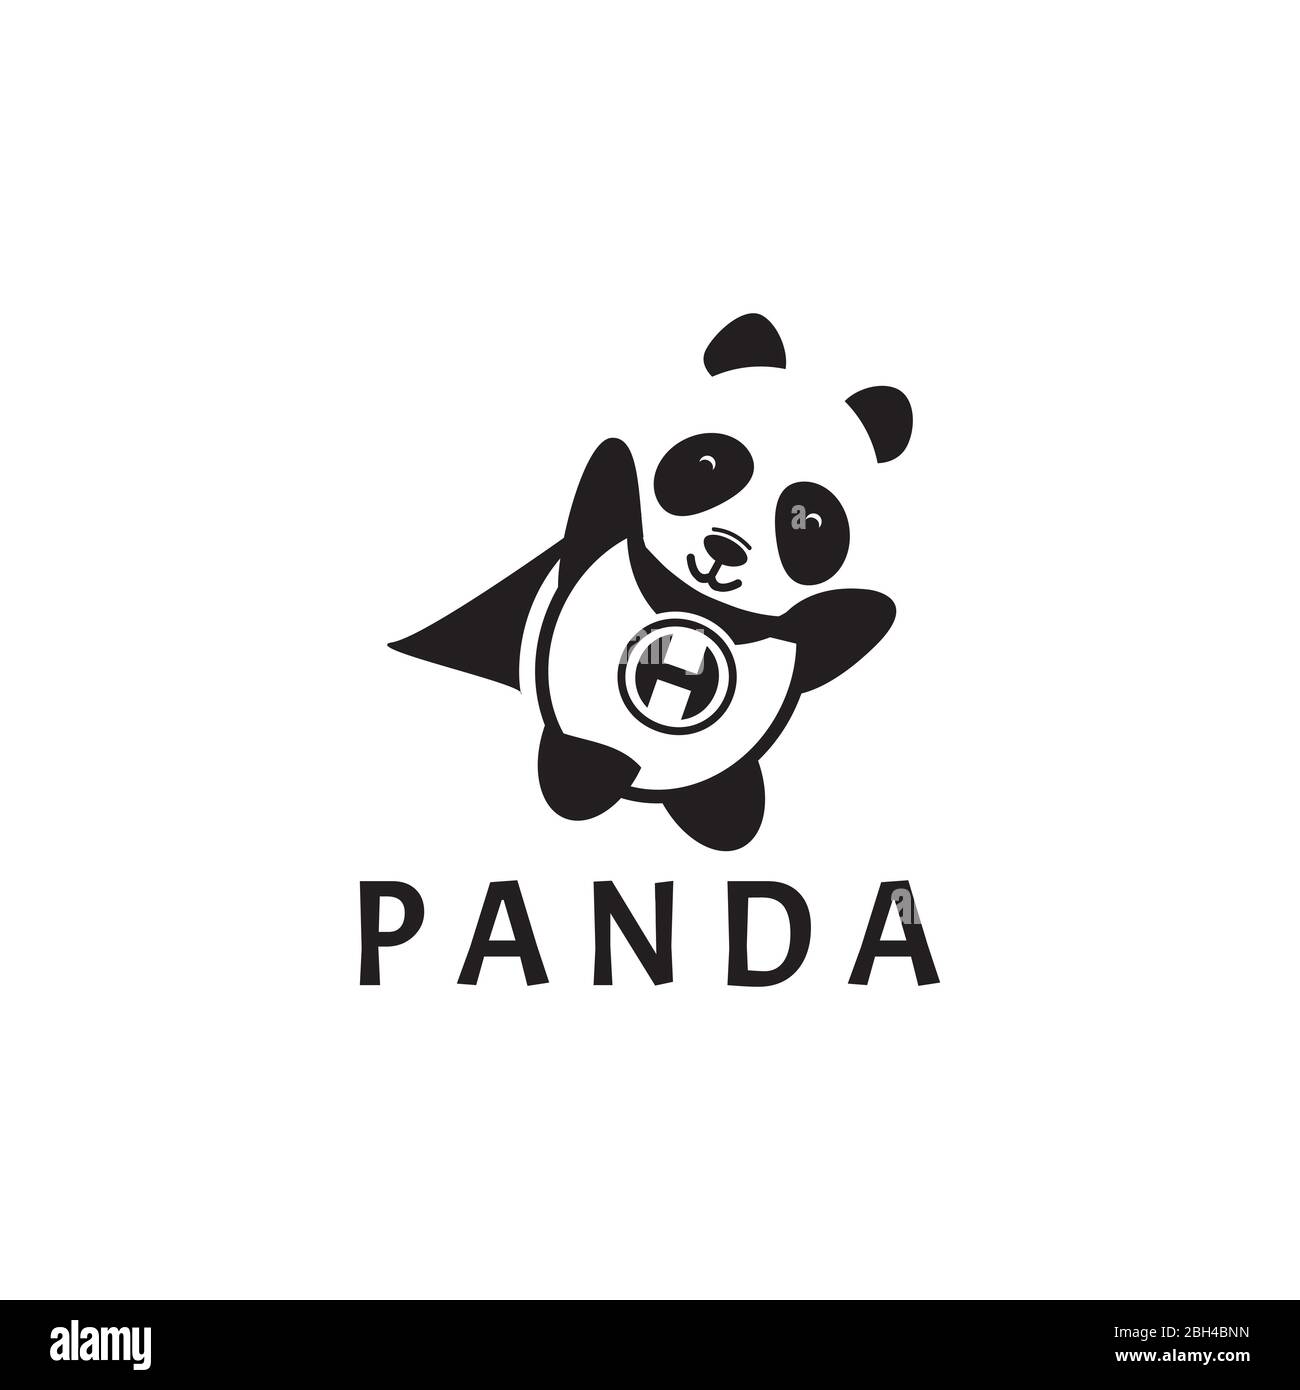 Panda logo hi-res stock photography and images - Alamy